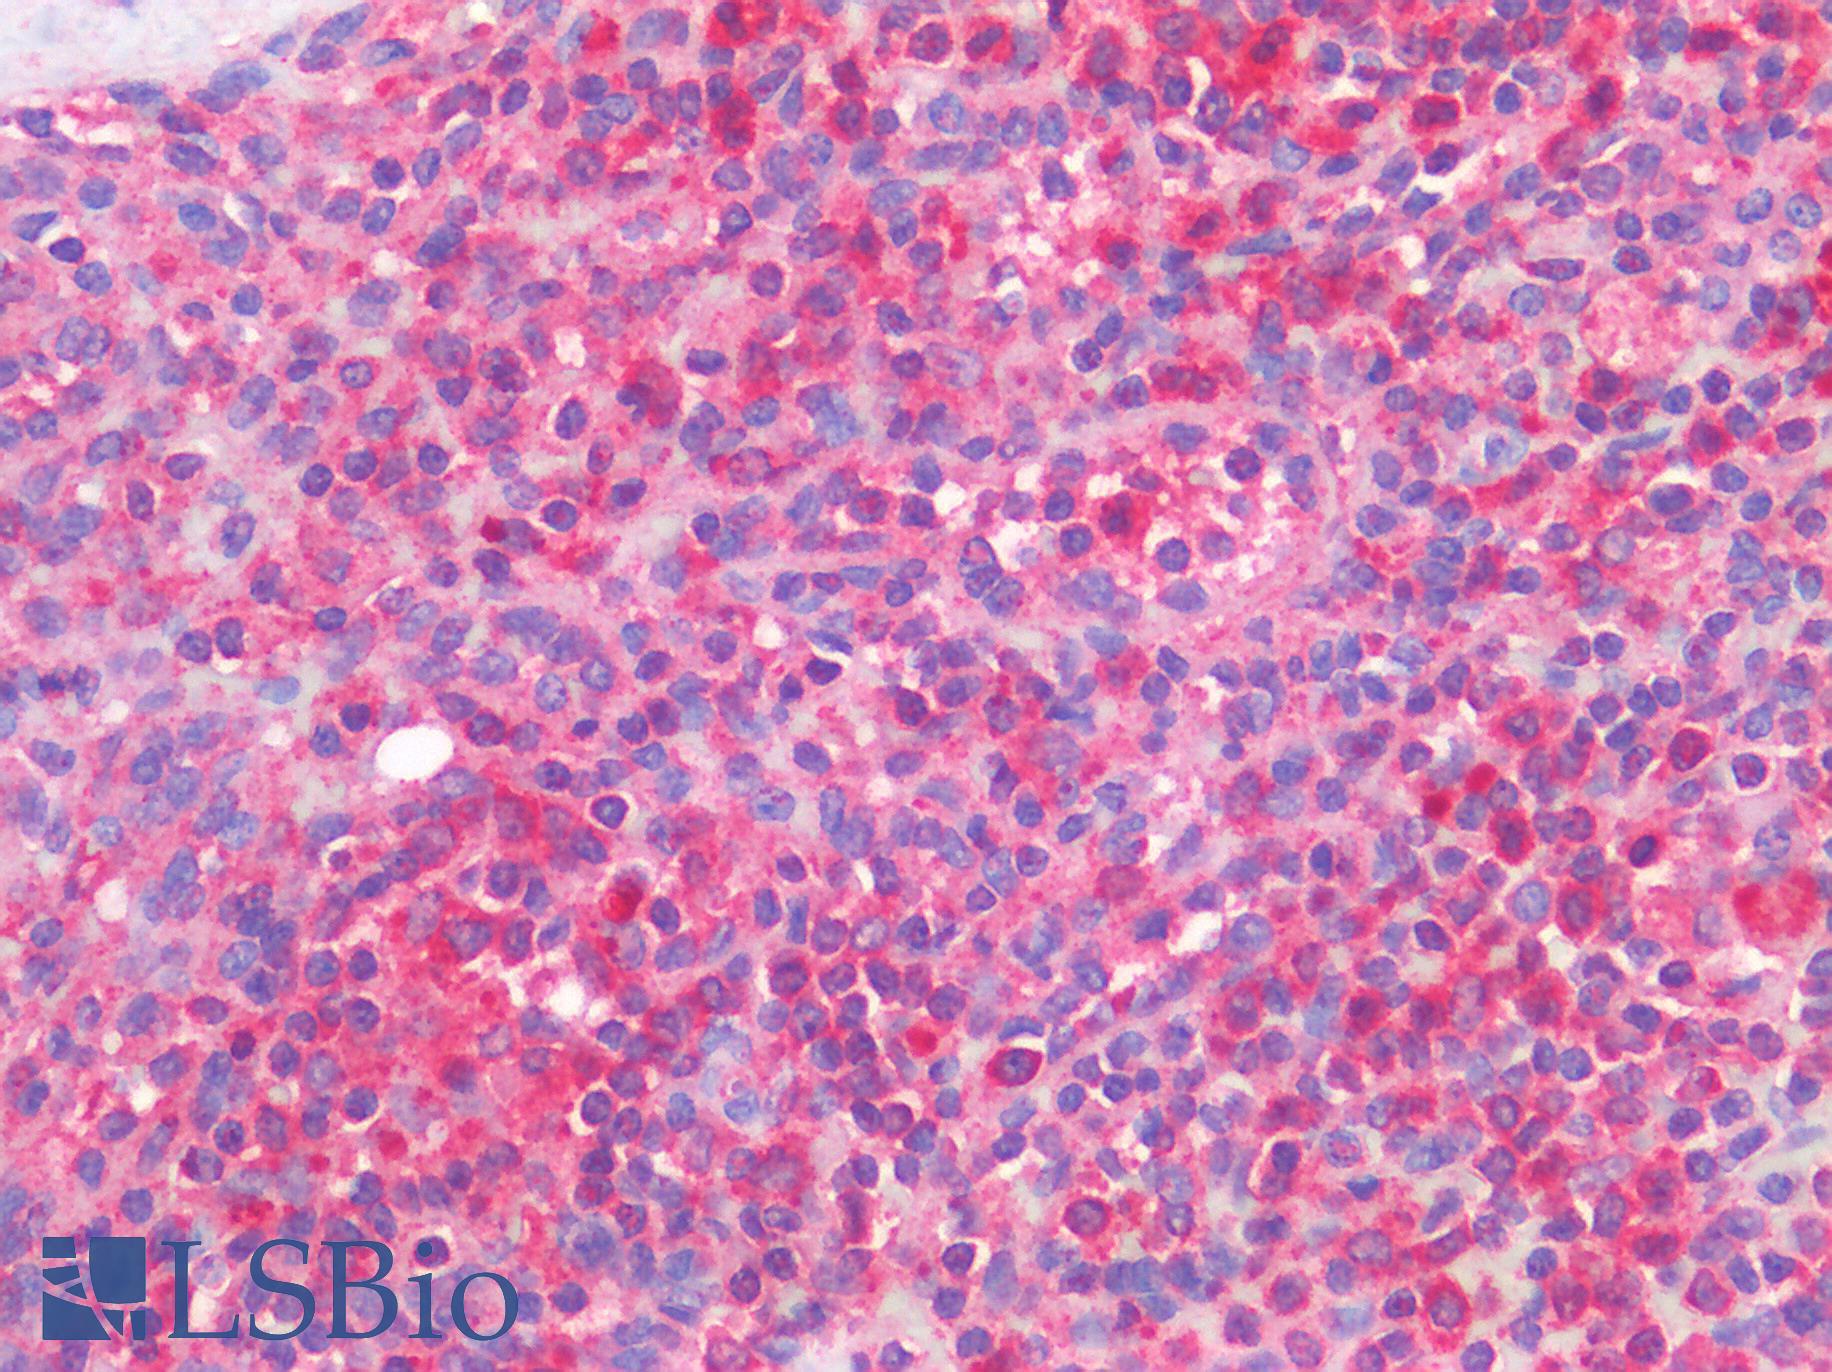 CD33 Antibody - Human Spleen: Formalin-Fixed, Paraffin-Embedded (FFPE)